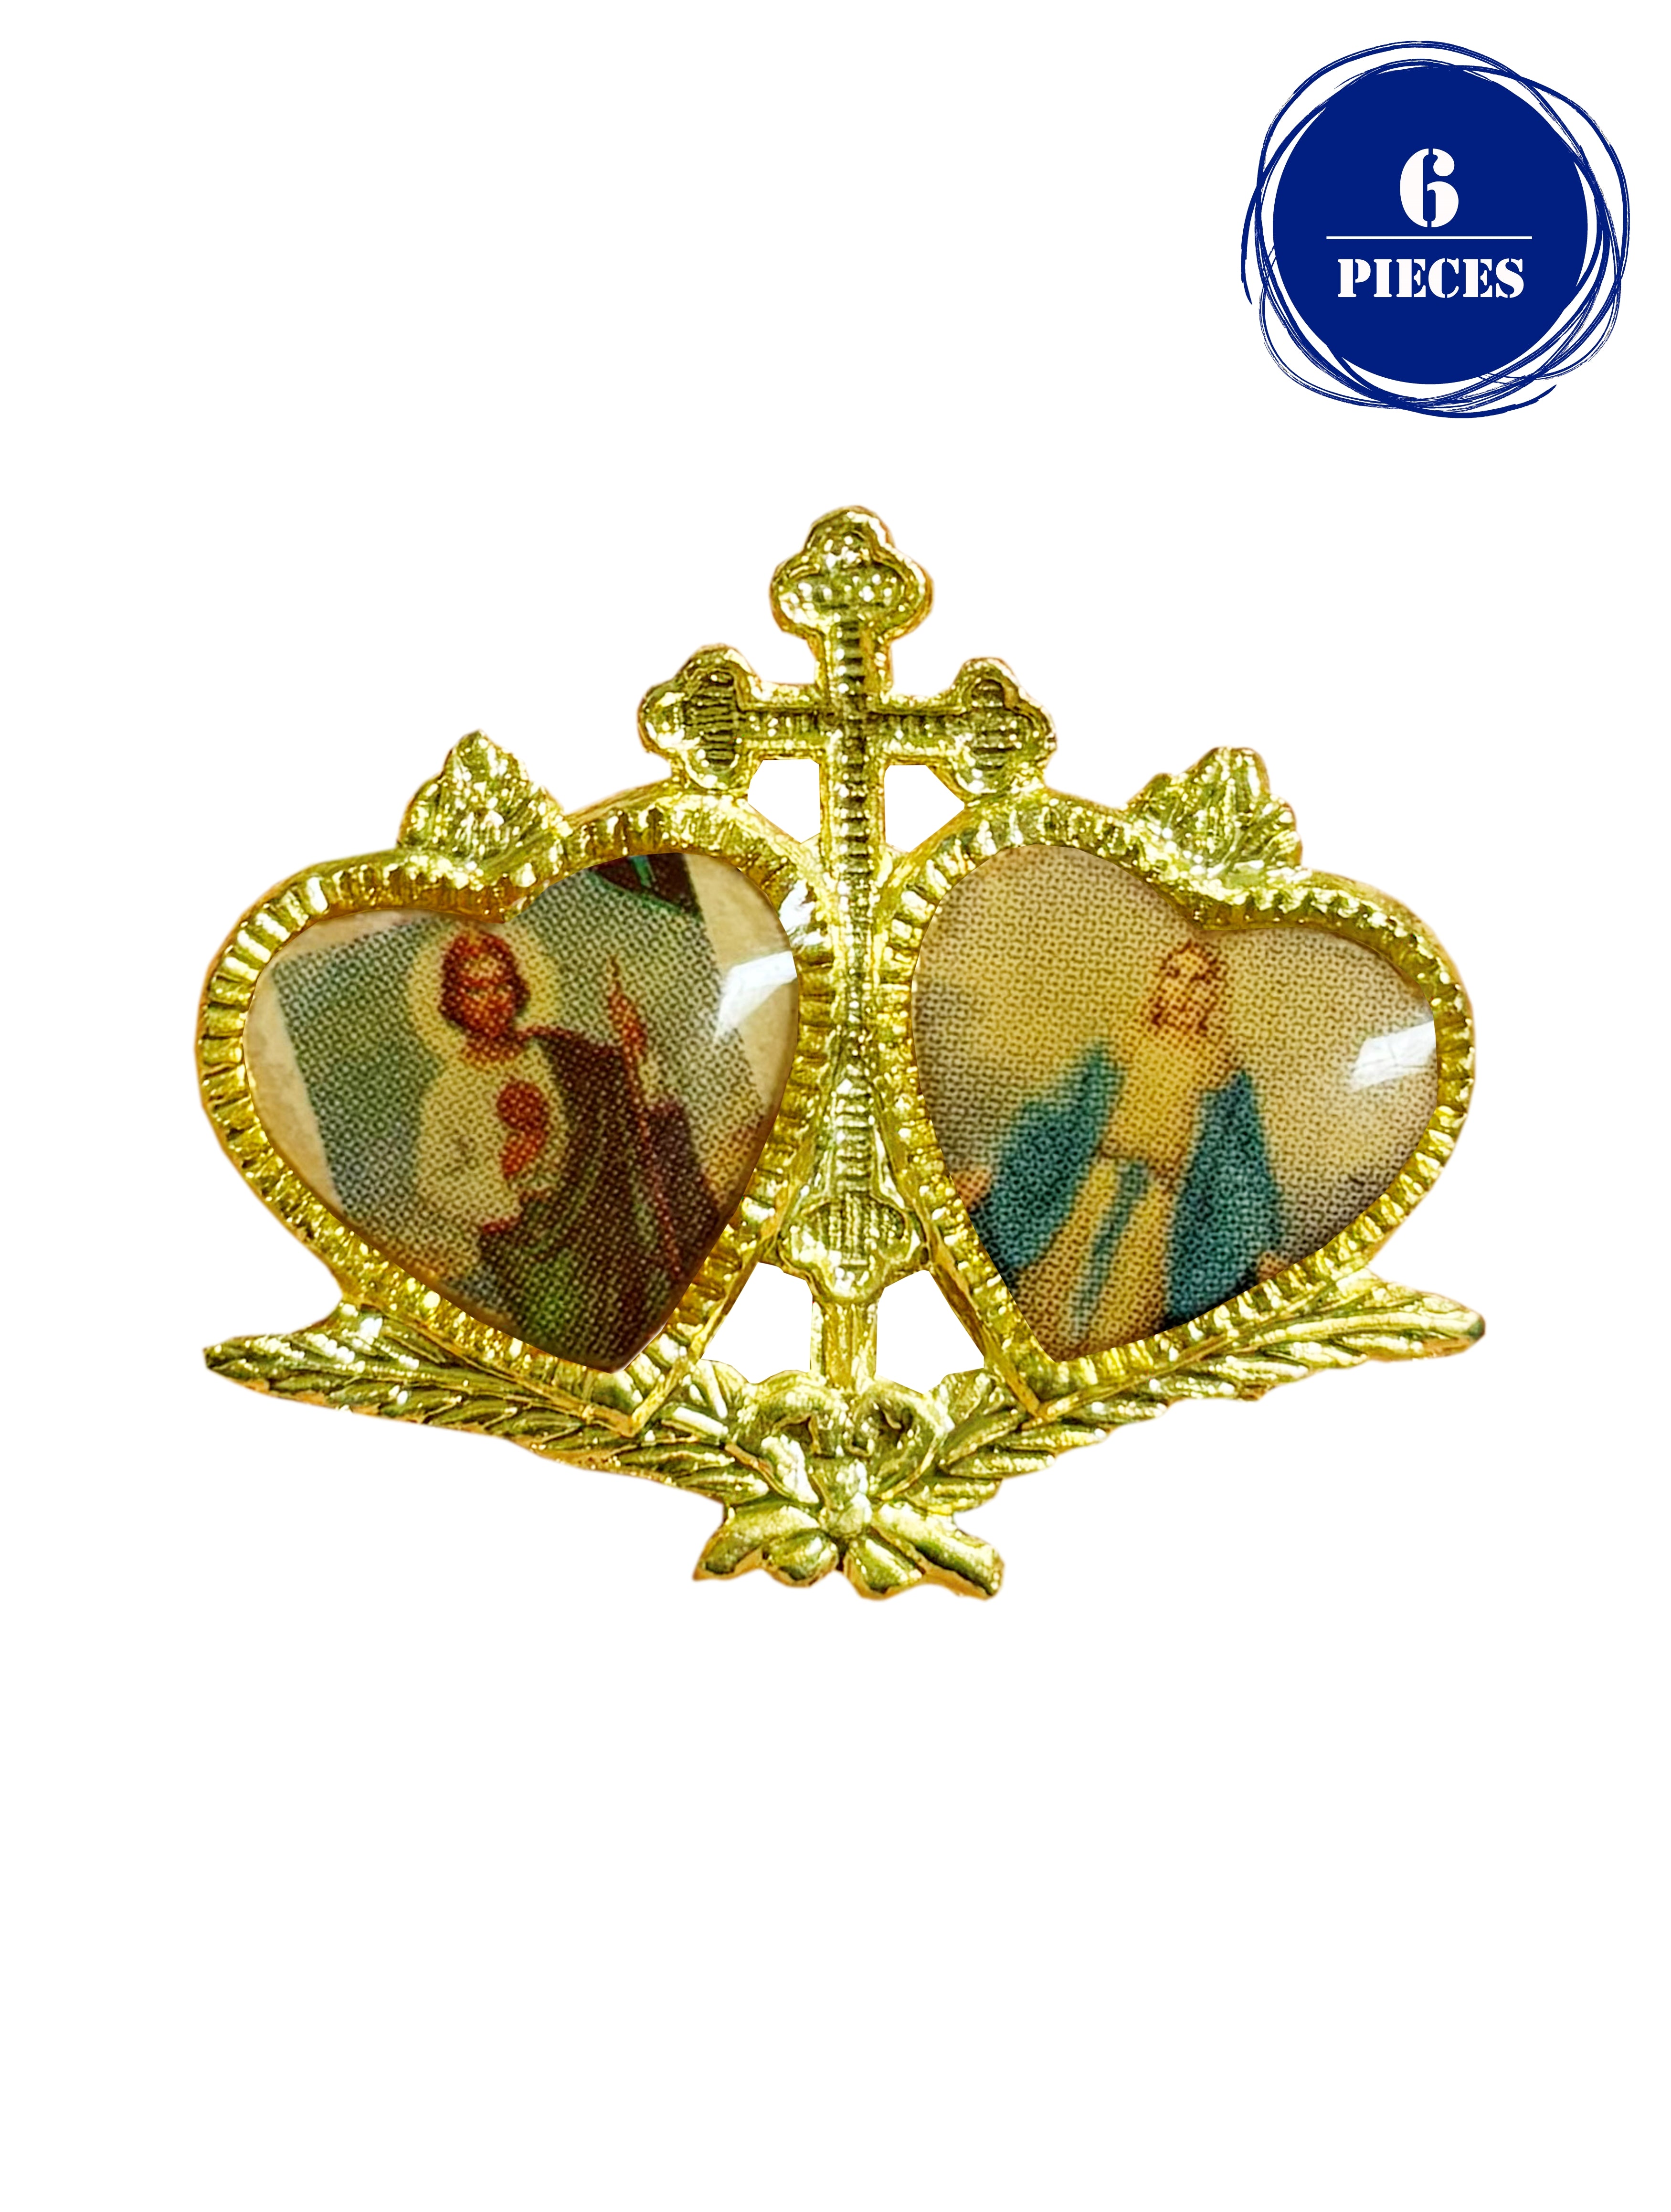 Two Hearts gold catholics lapel pin